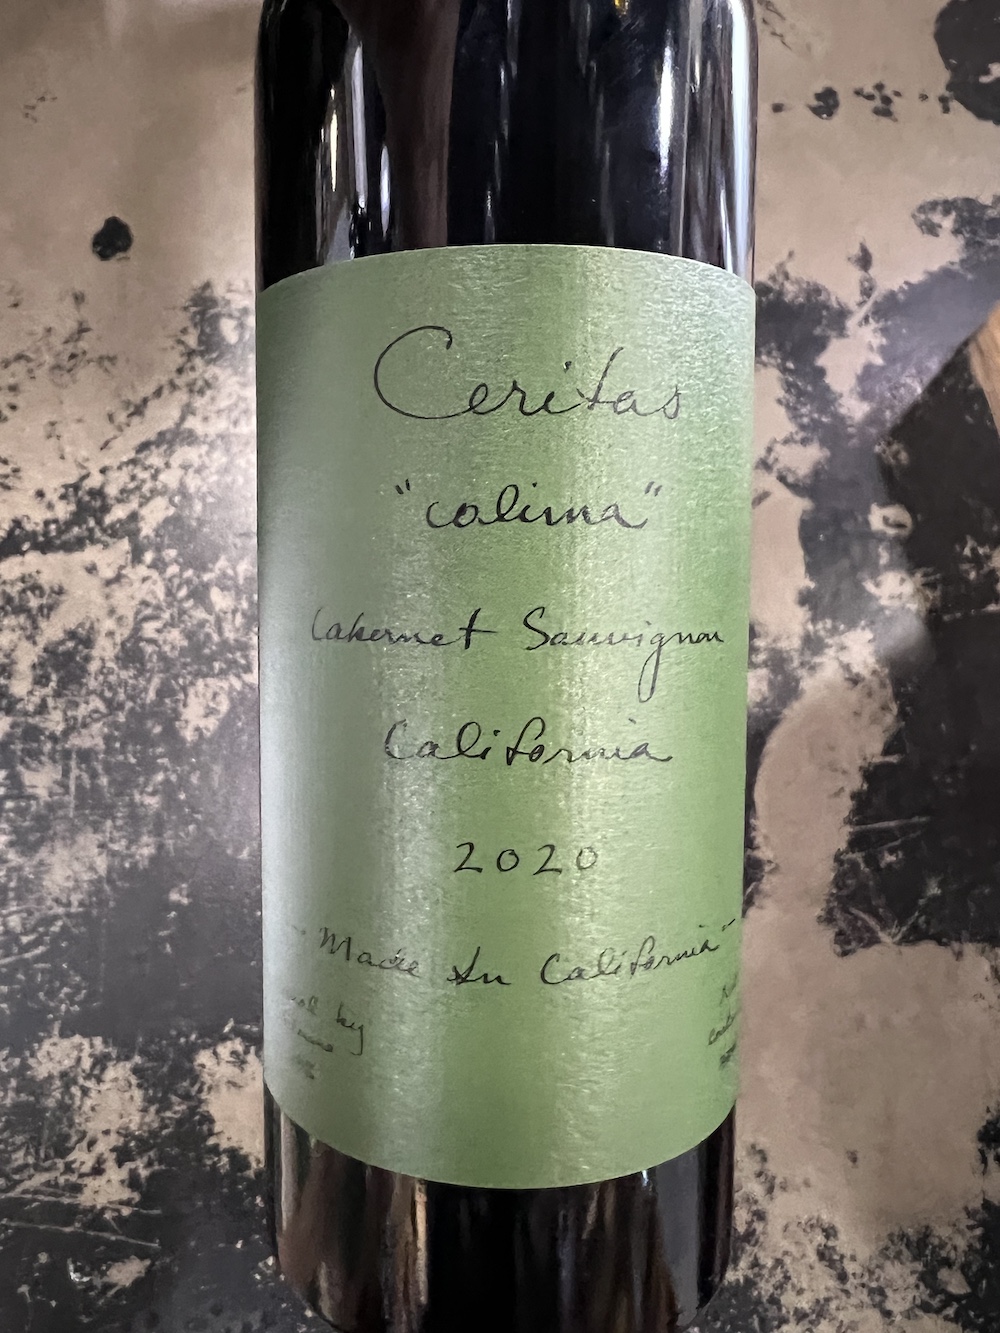 Ceritas - Colima Cabernet Sauvignon 2020 (750)